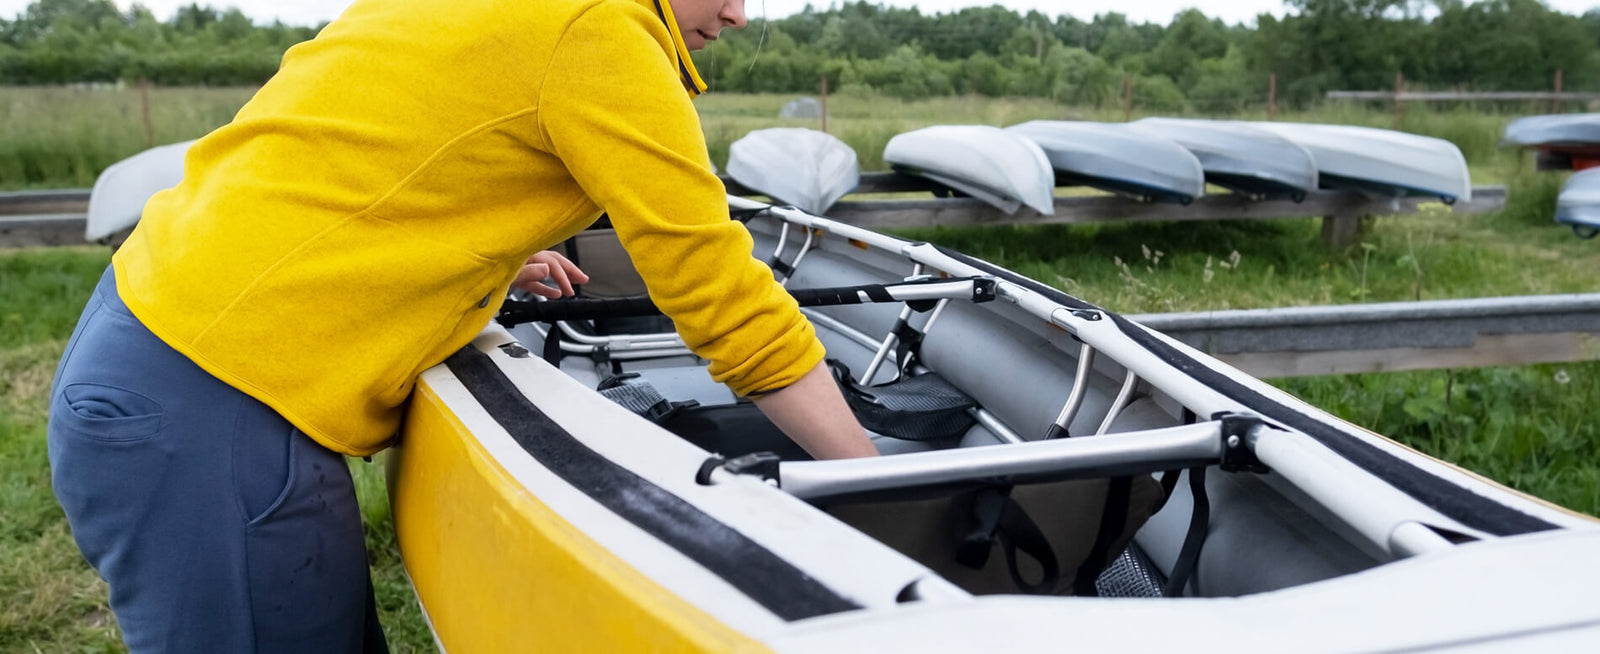 BKC PK13 13' Pedal Drive Fishing Kayak W/ Rudder System and Instant  Reverse, Paddle, Upright Aluminum Frame Seat